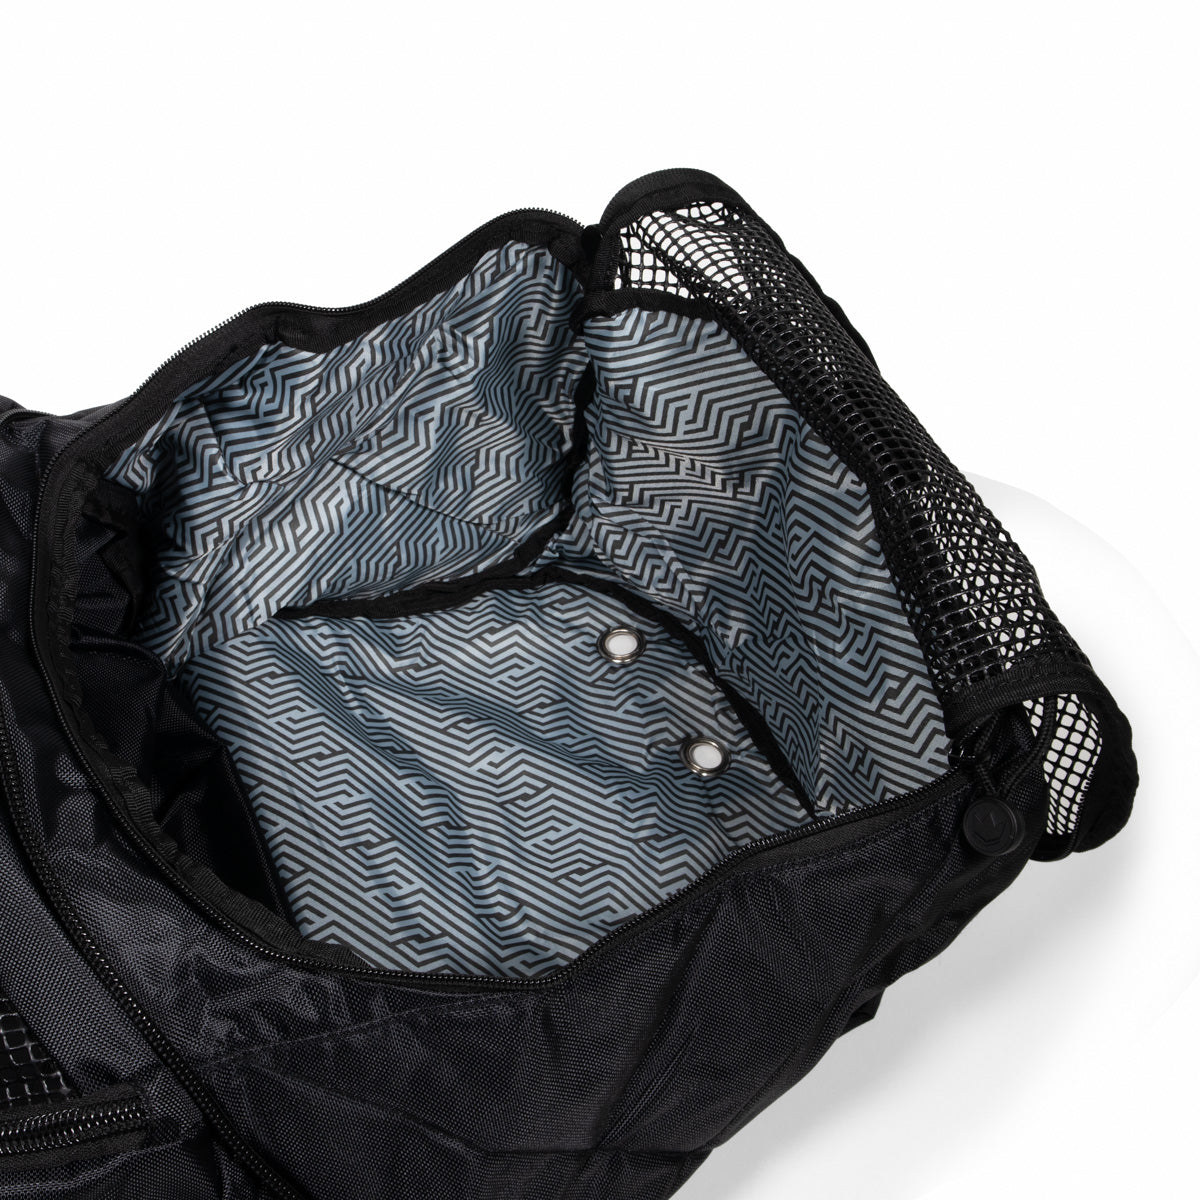 Backpack-bag Kingz Convertible 2.0